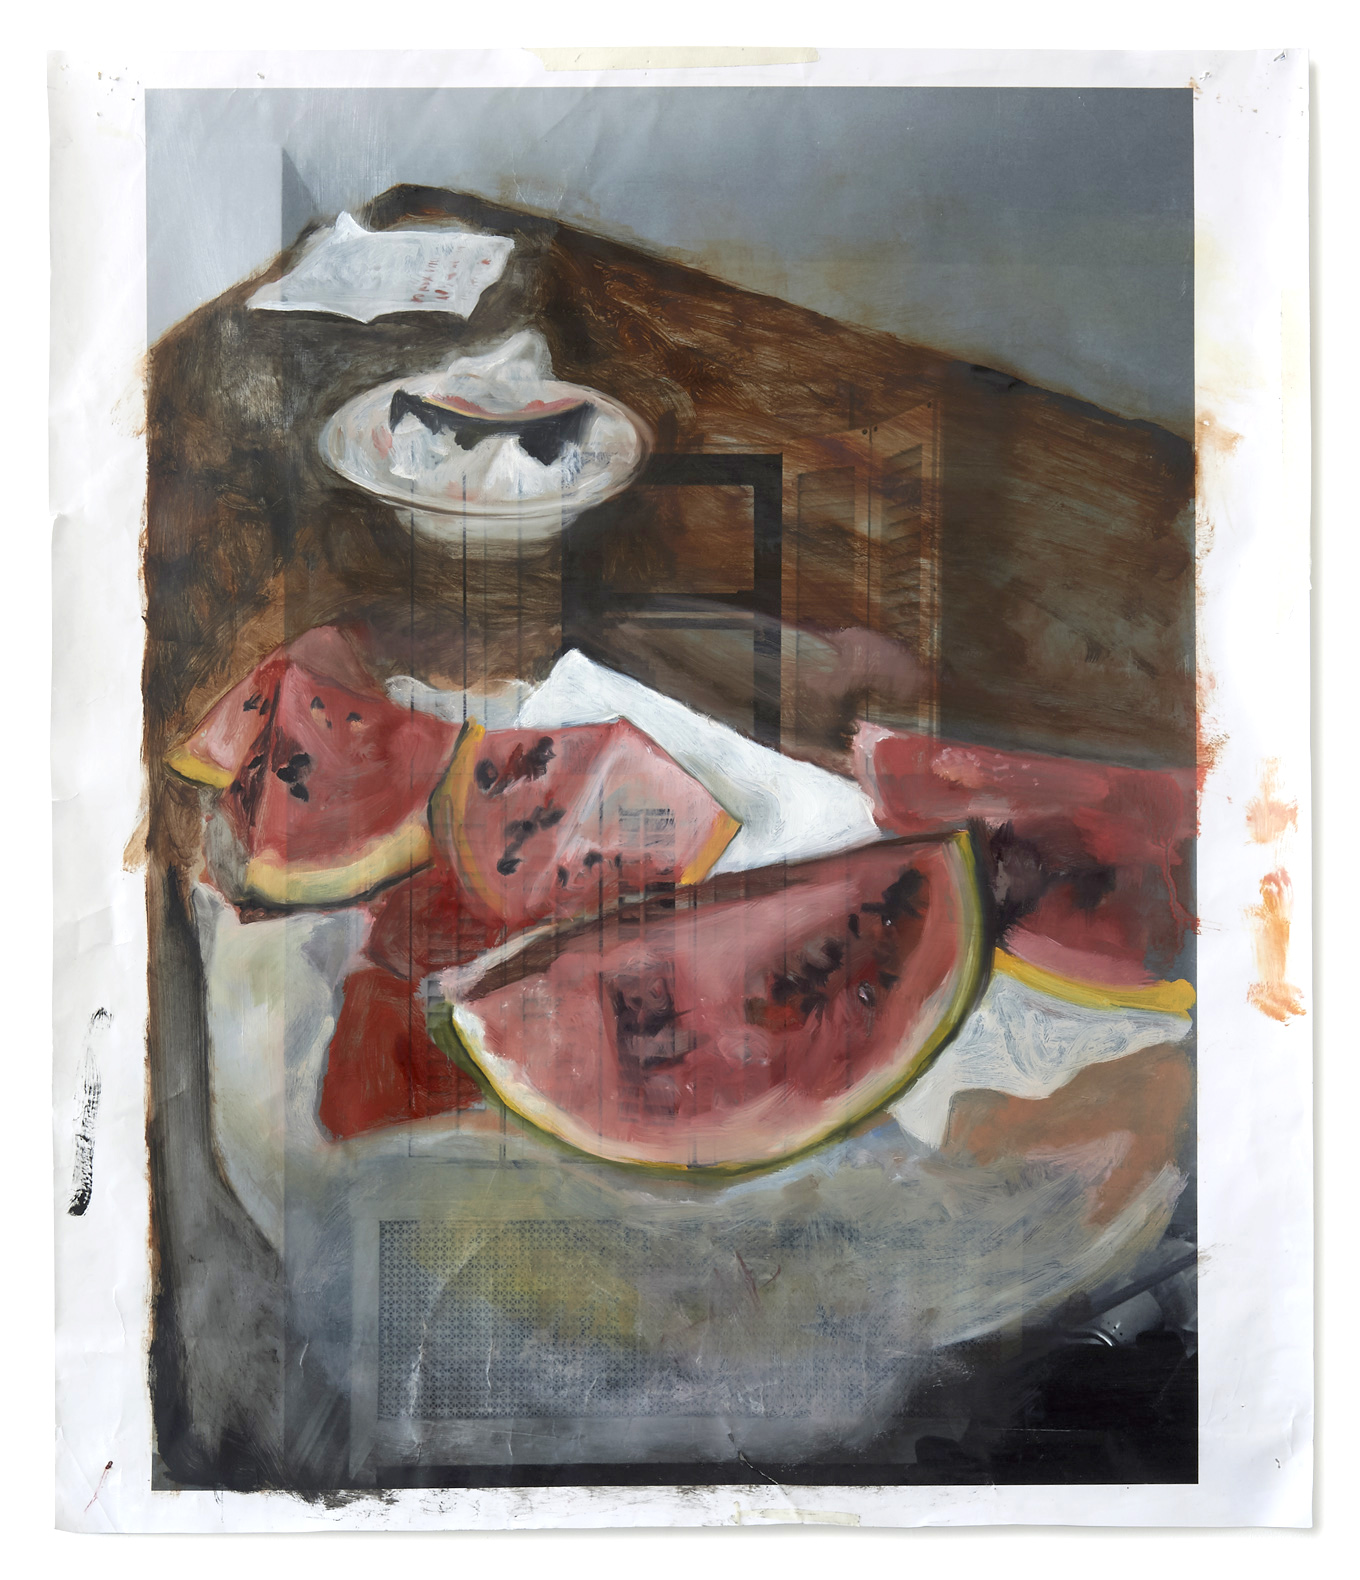    Watermelon in Living Quarters    Oil on archival inkjet print  28x24   